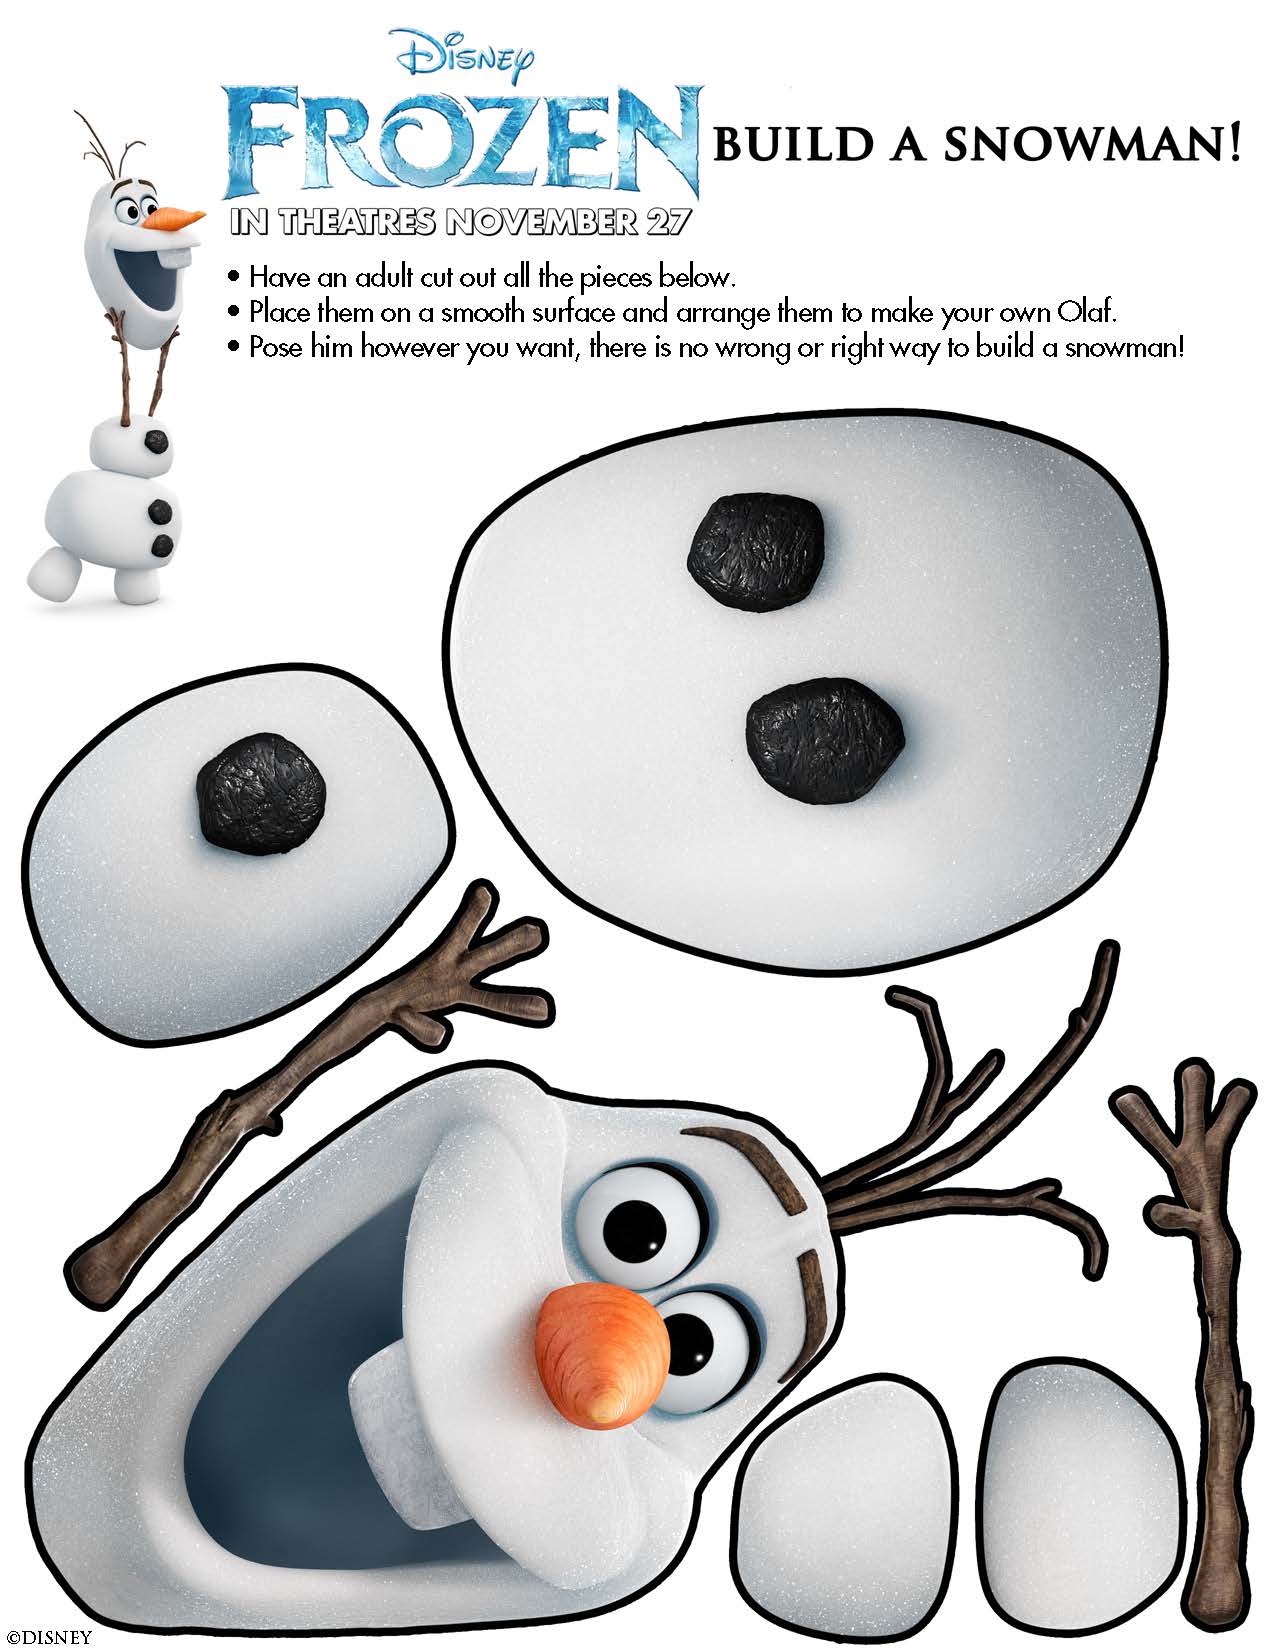 Disney's Frozen Snowman